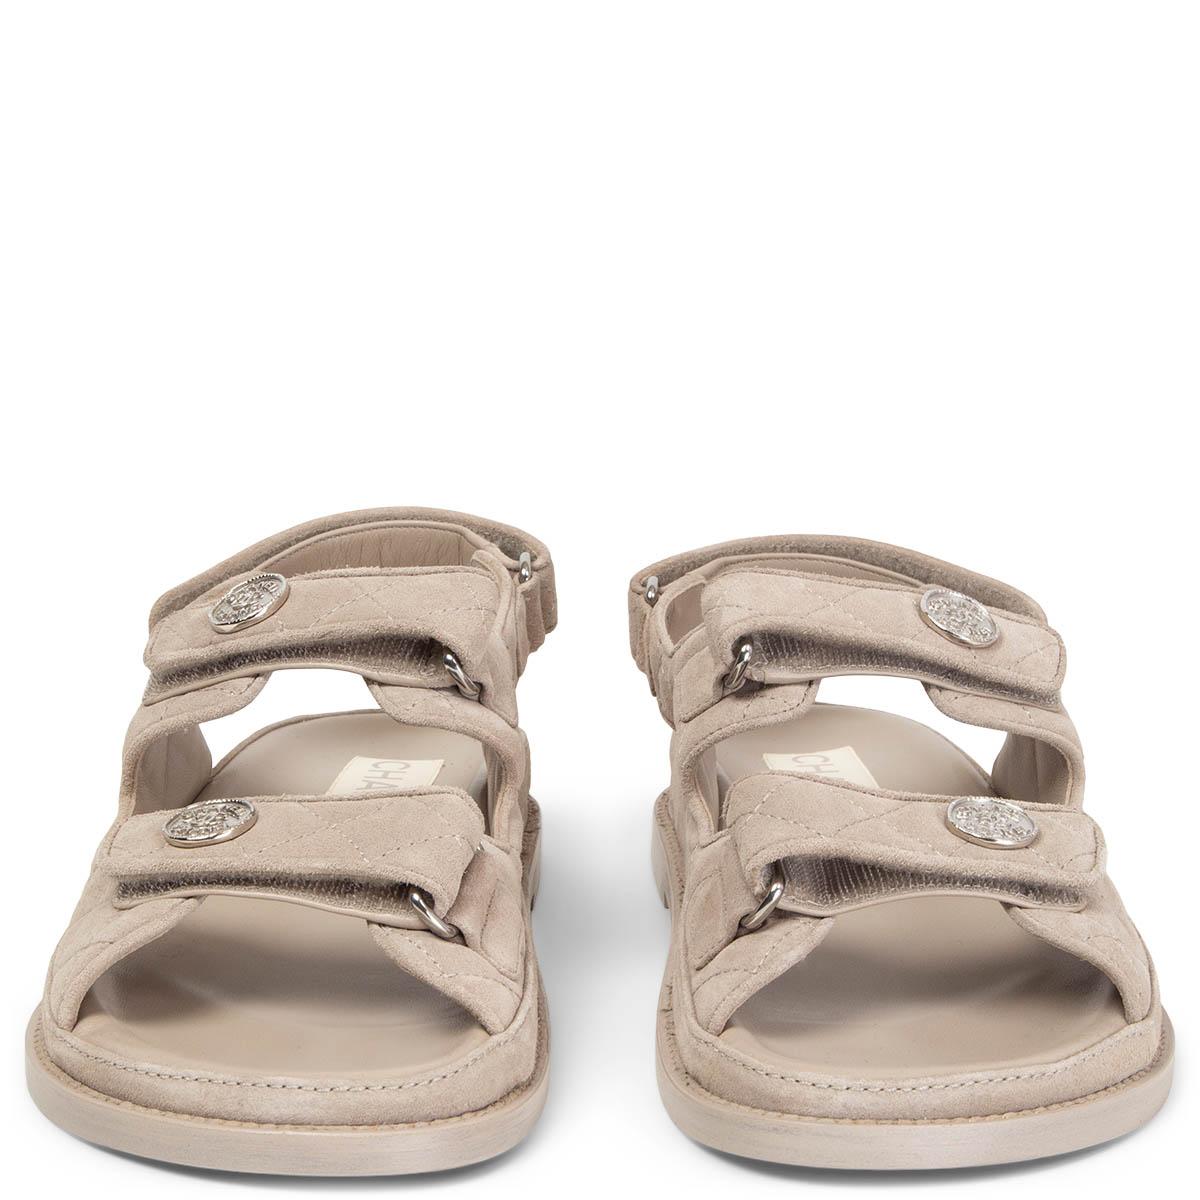 Chanel Dad Sandals Beige - For Sale on 1stDibs  chanel beige dad sandals,  chanel 2 strap sandals, chanel dad sandals nude